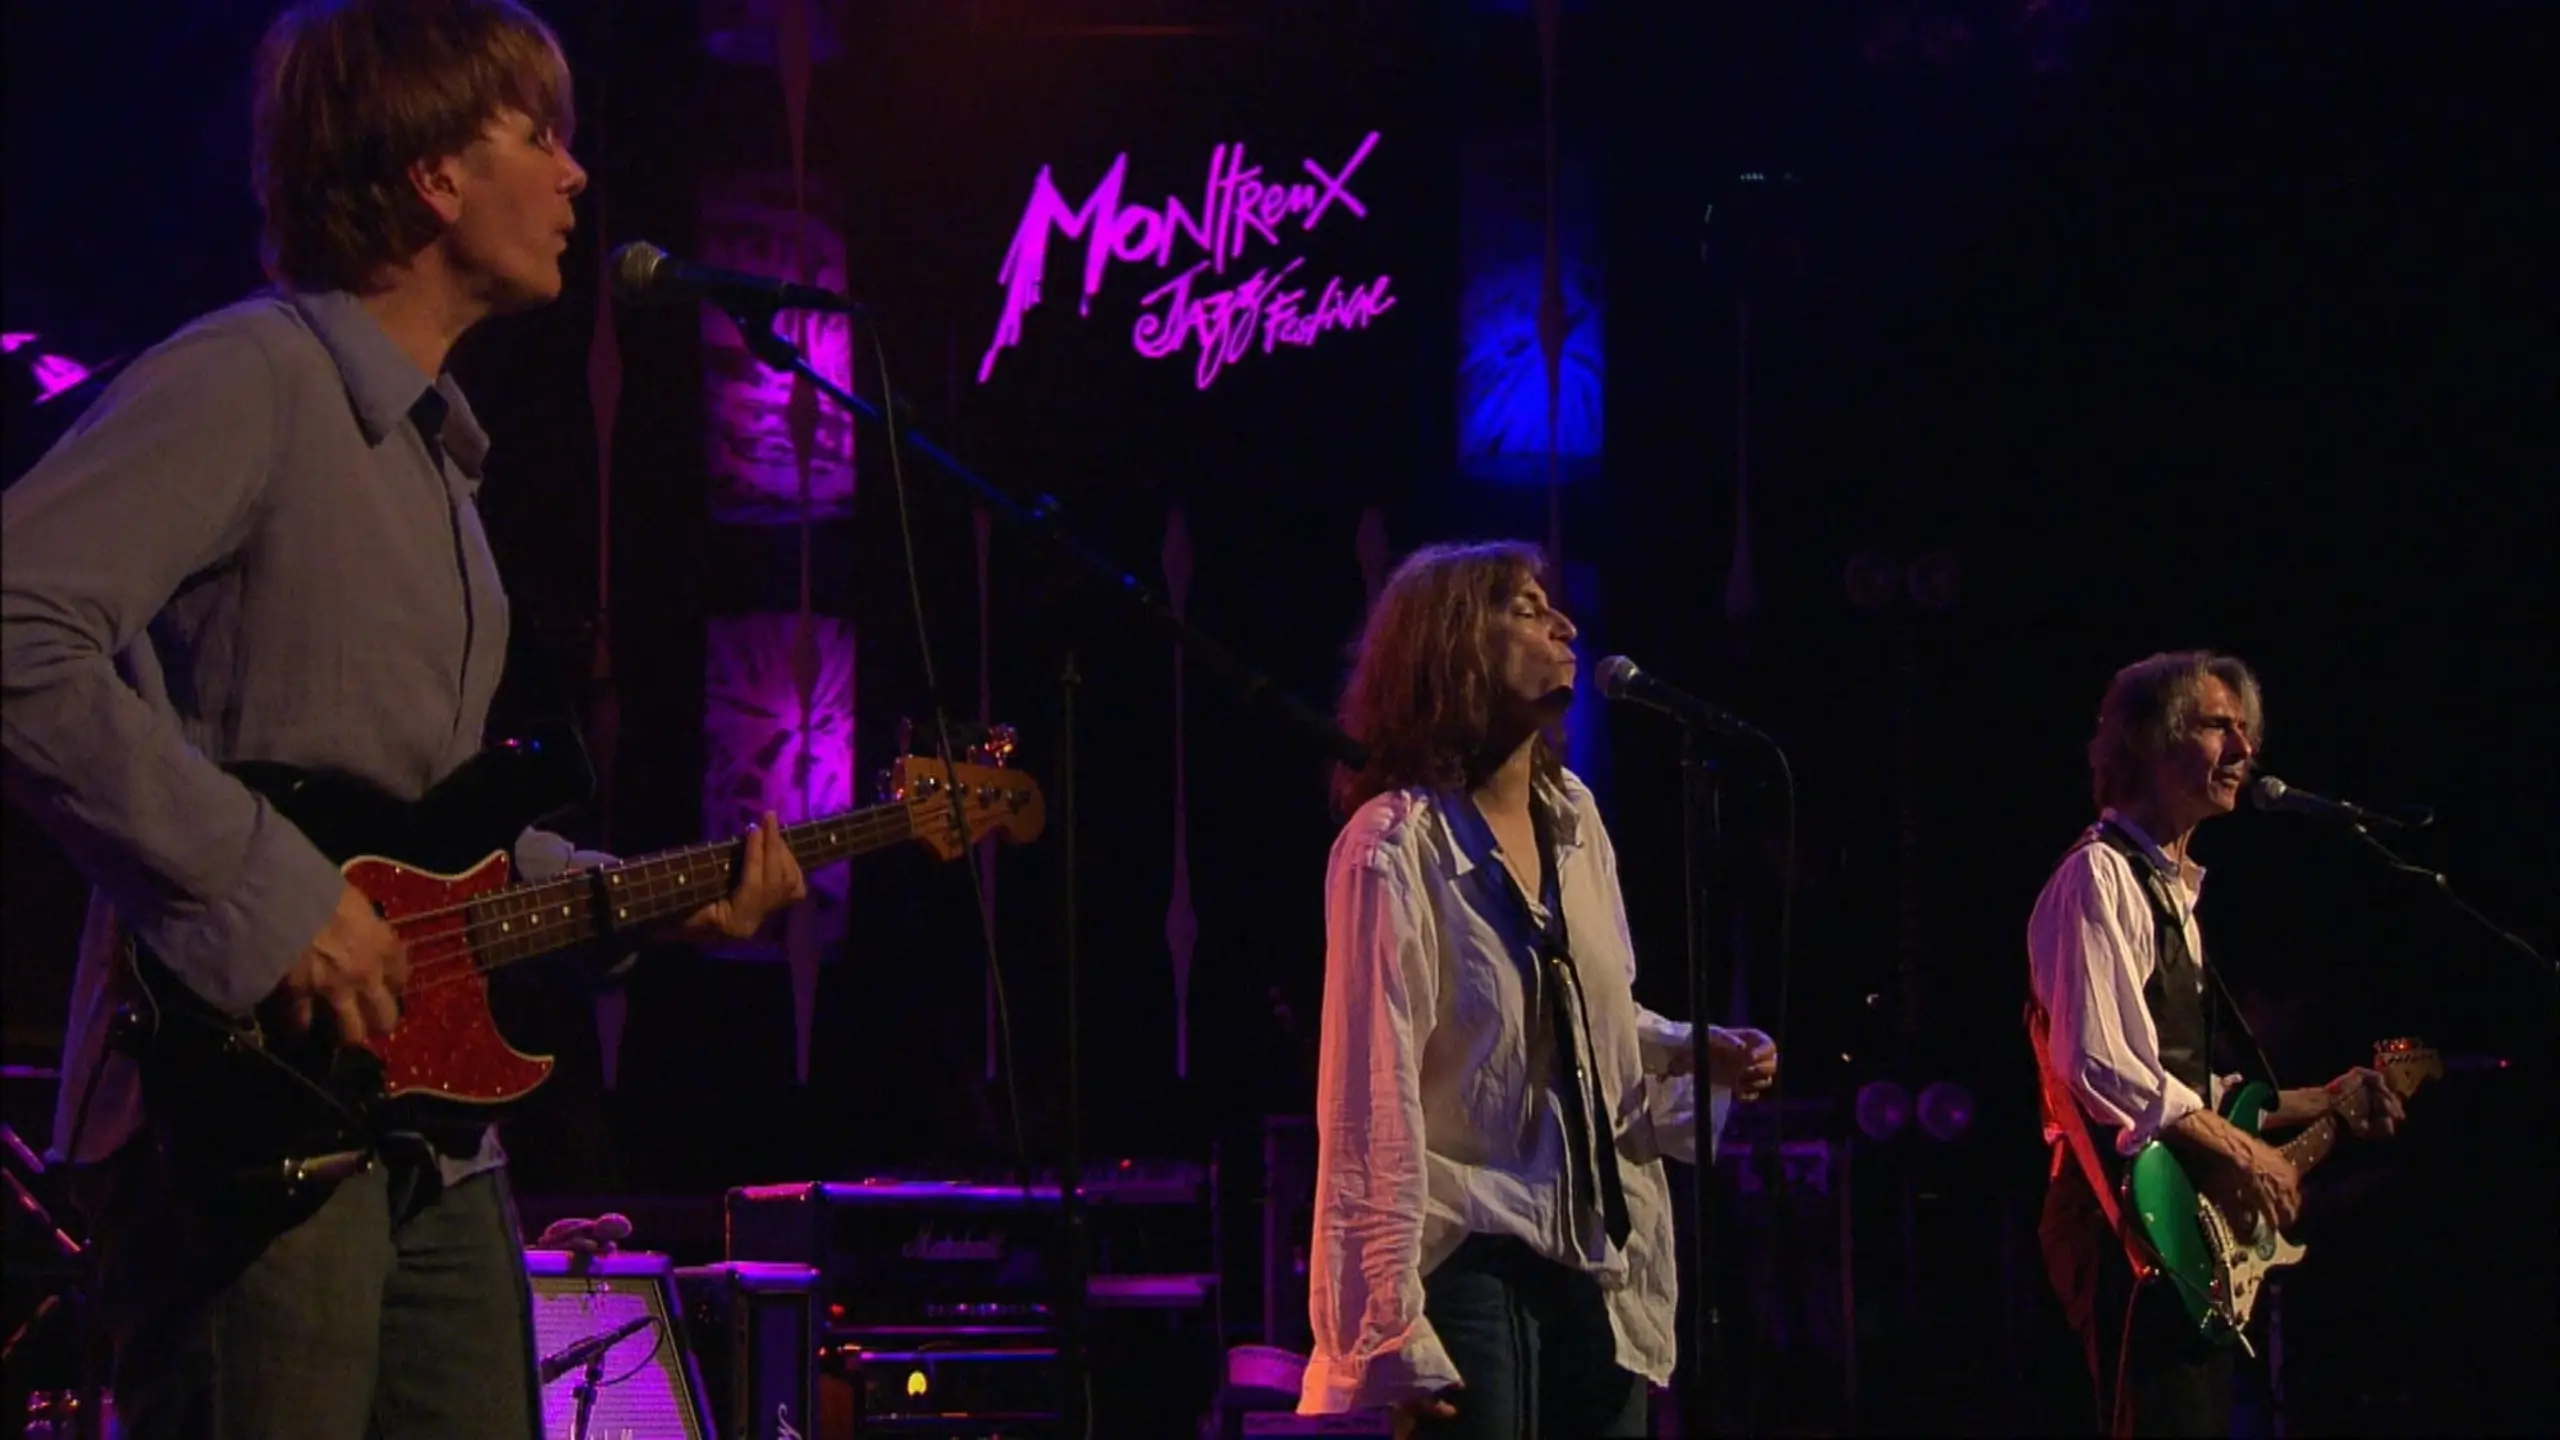 Patti Smith  - Live at Montreux